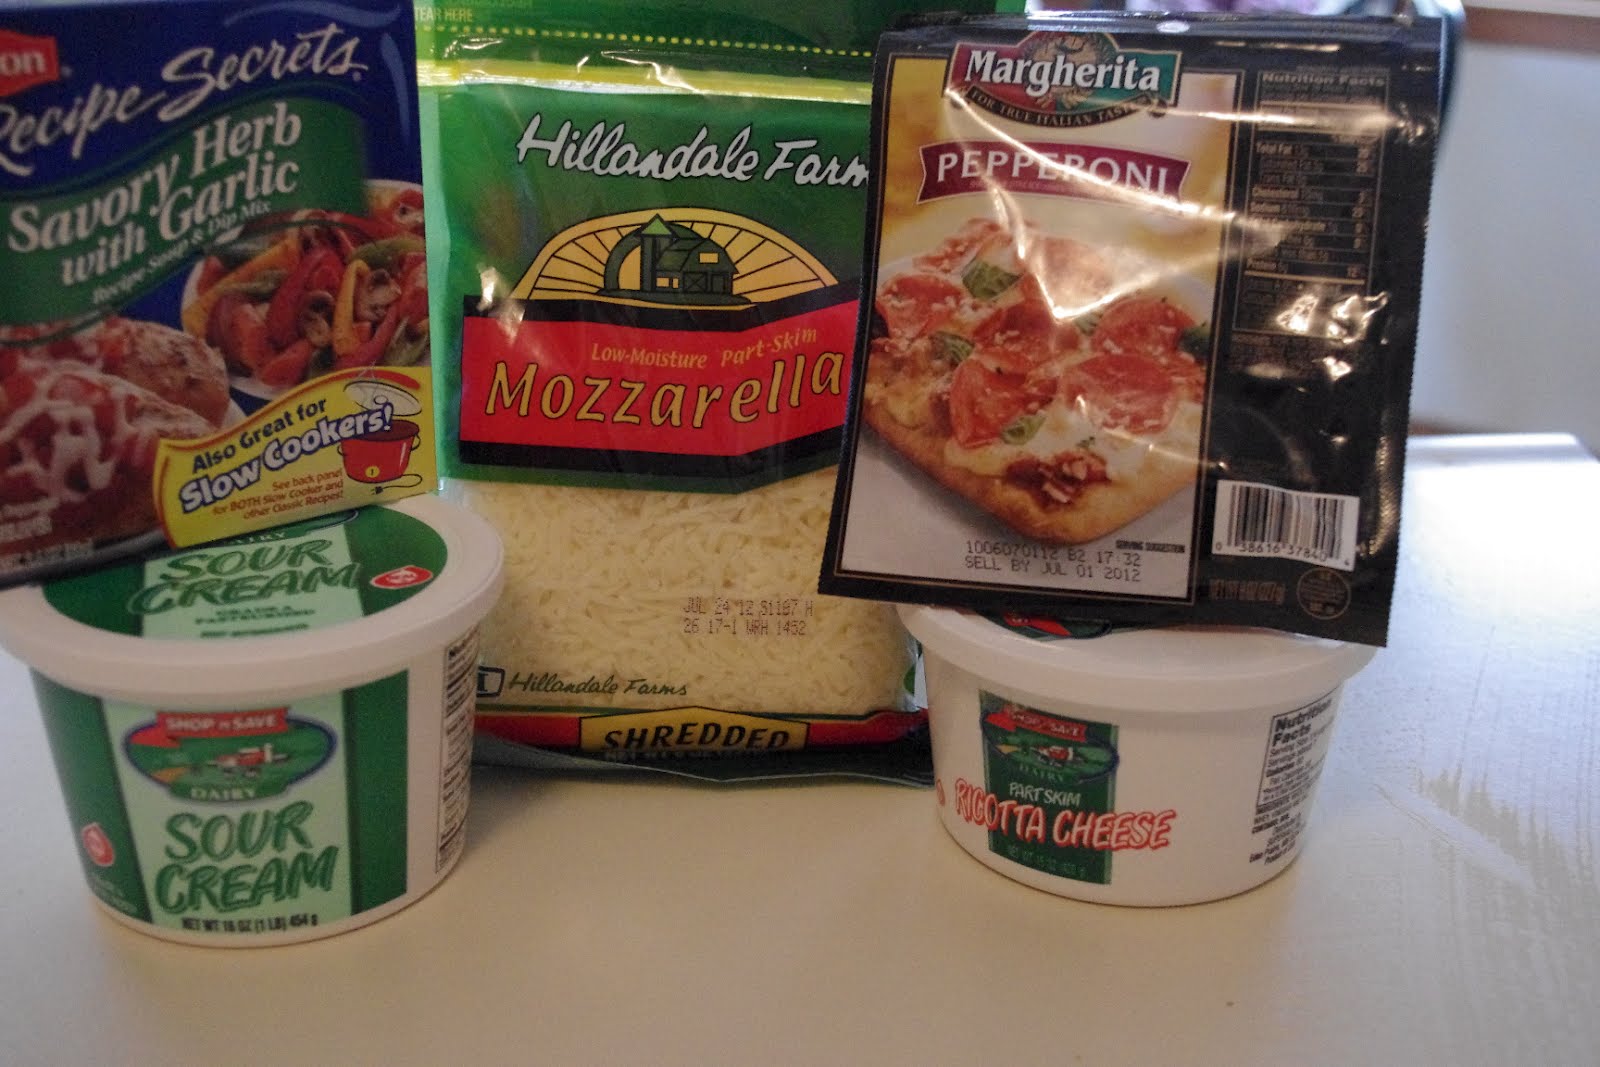 The Busy Moms' Recipe Box: White Pizza Dip